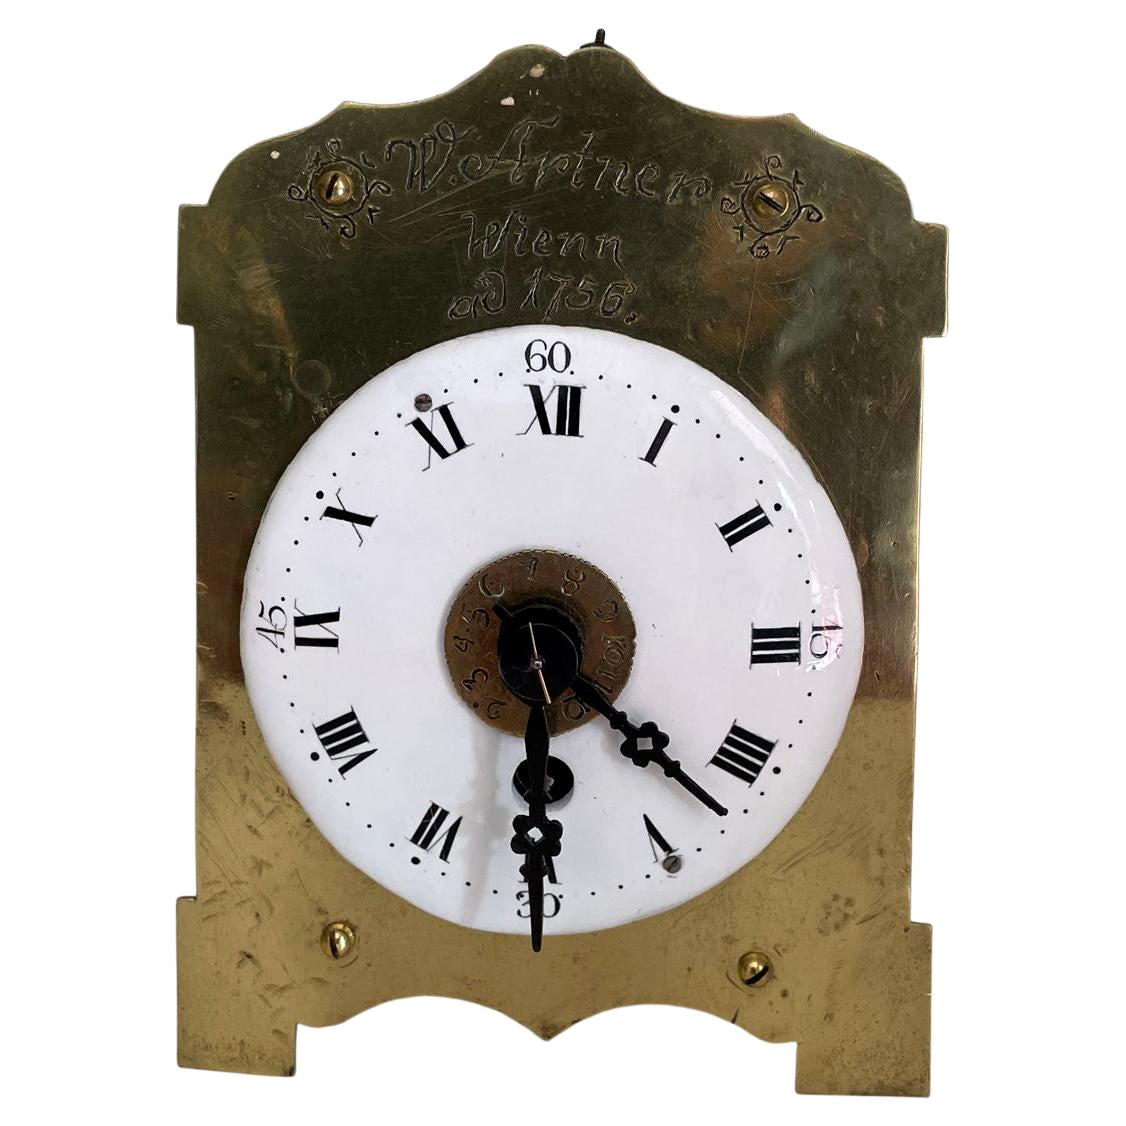 Austrian Zappler Alarm Clock, W Artner, Wienn, 18th Century For Sale